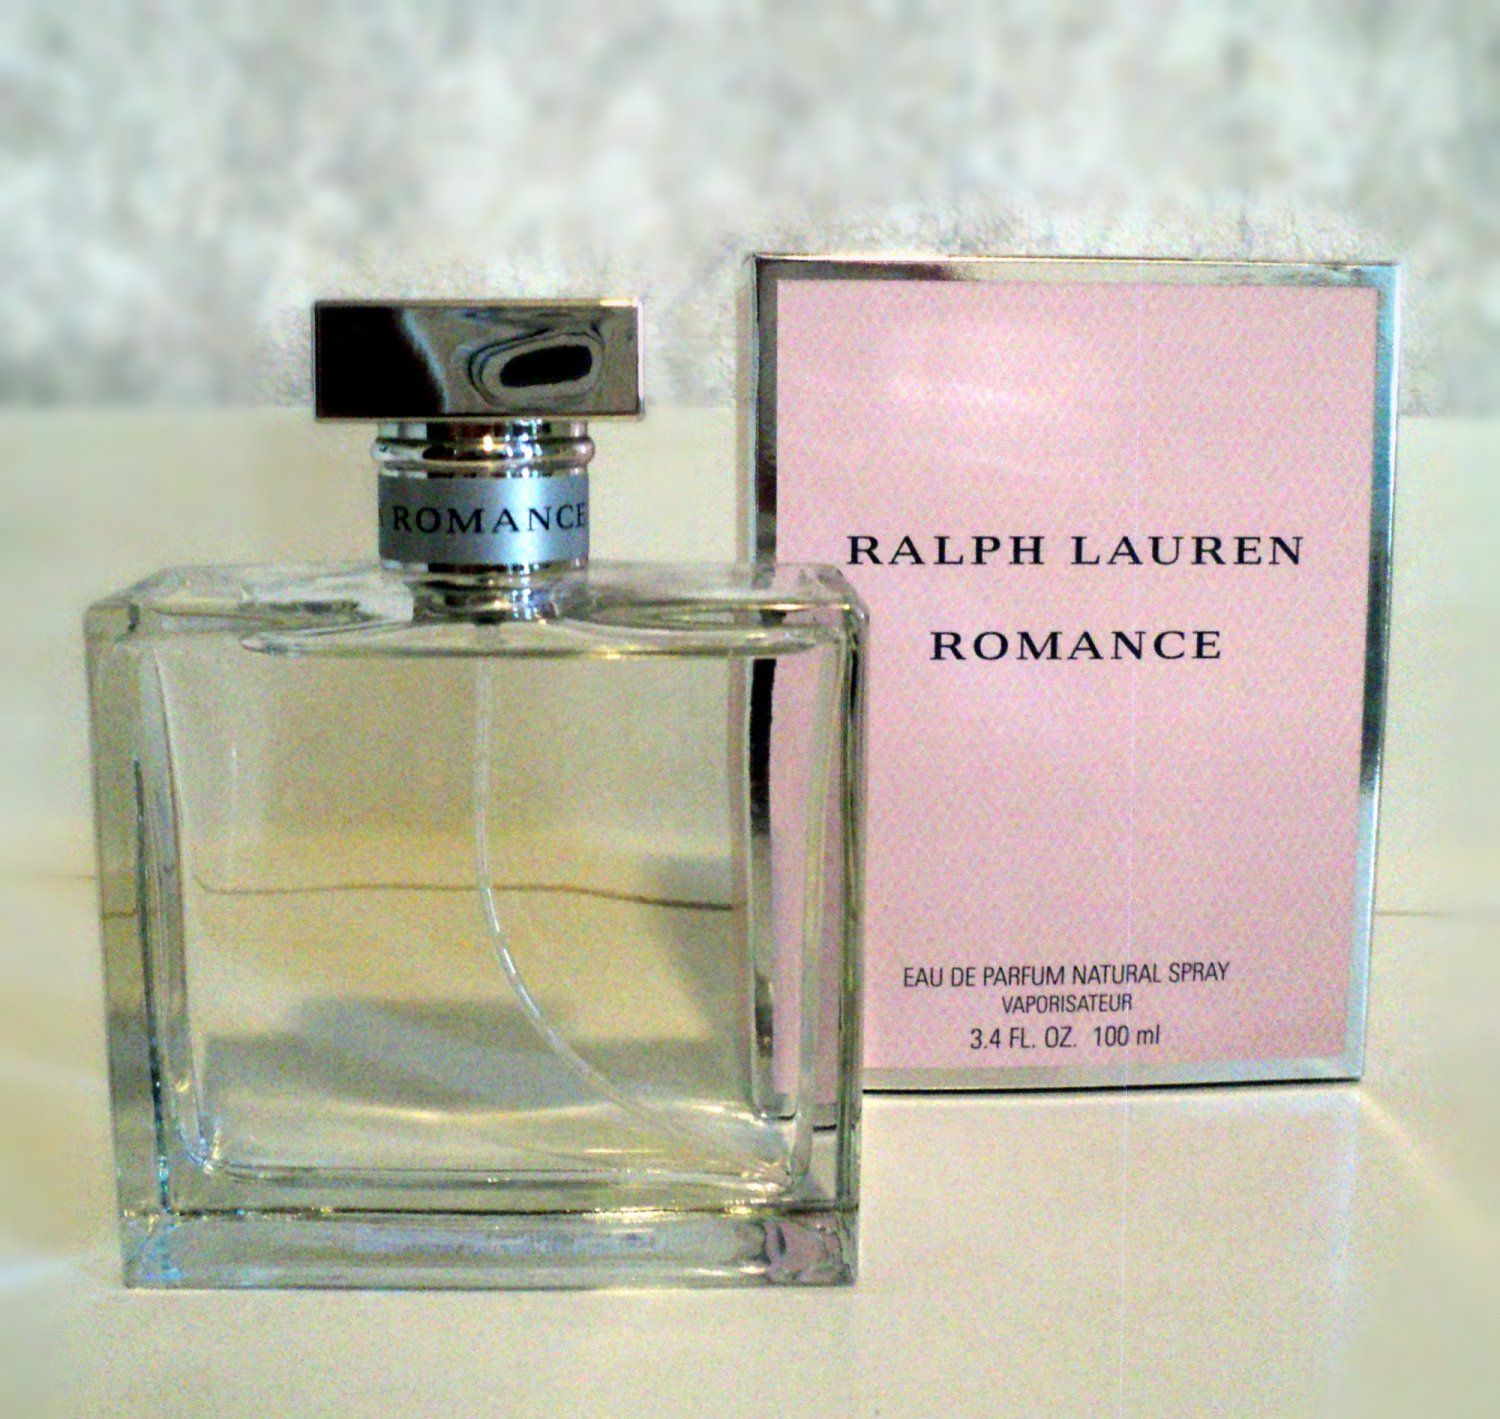 Ralph Lauren Romance Eau de Parfum Spray 3.4 FL OZ